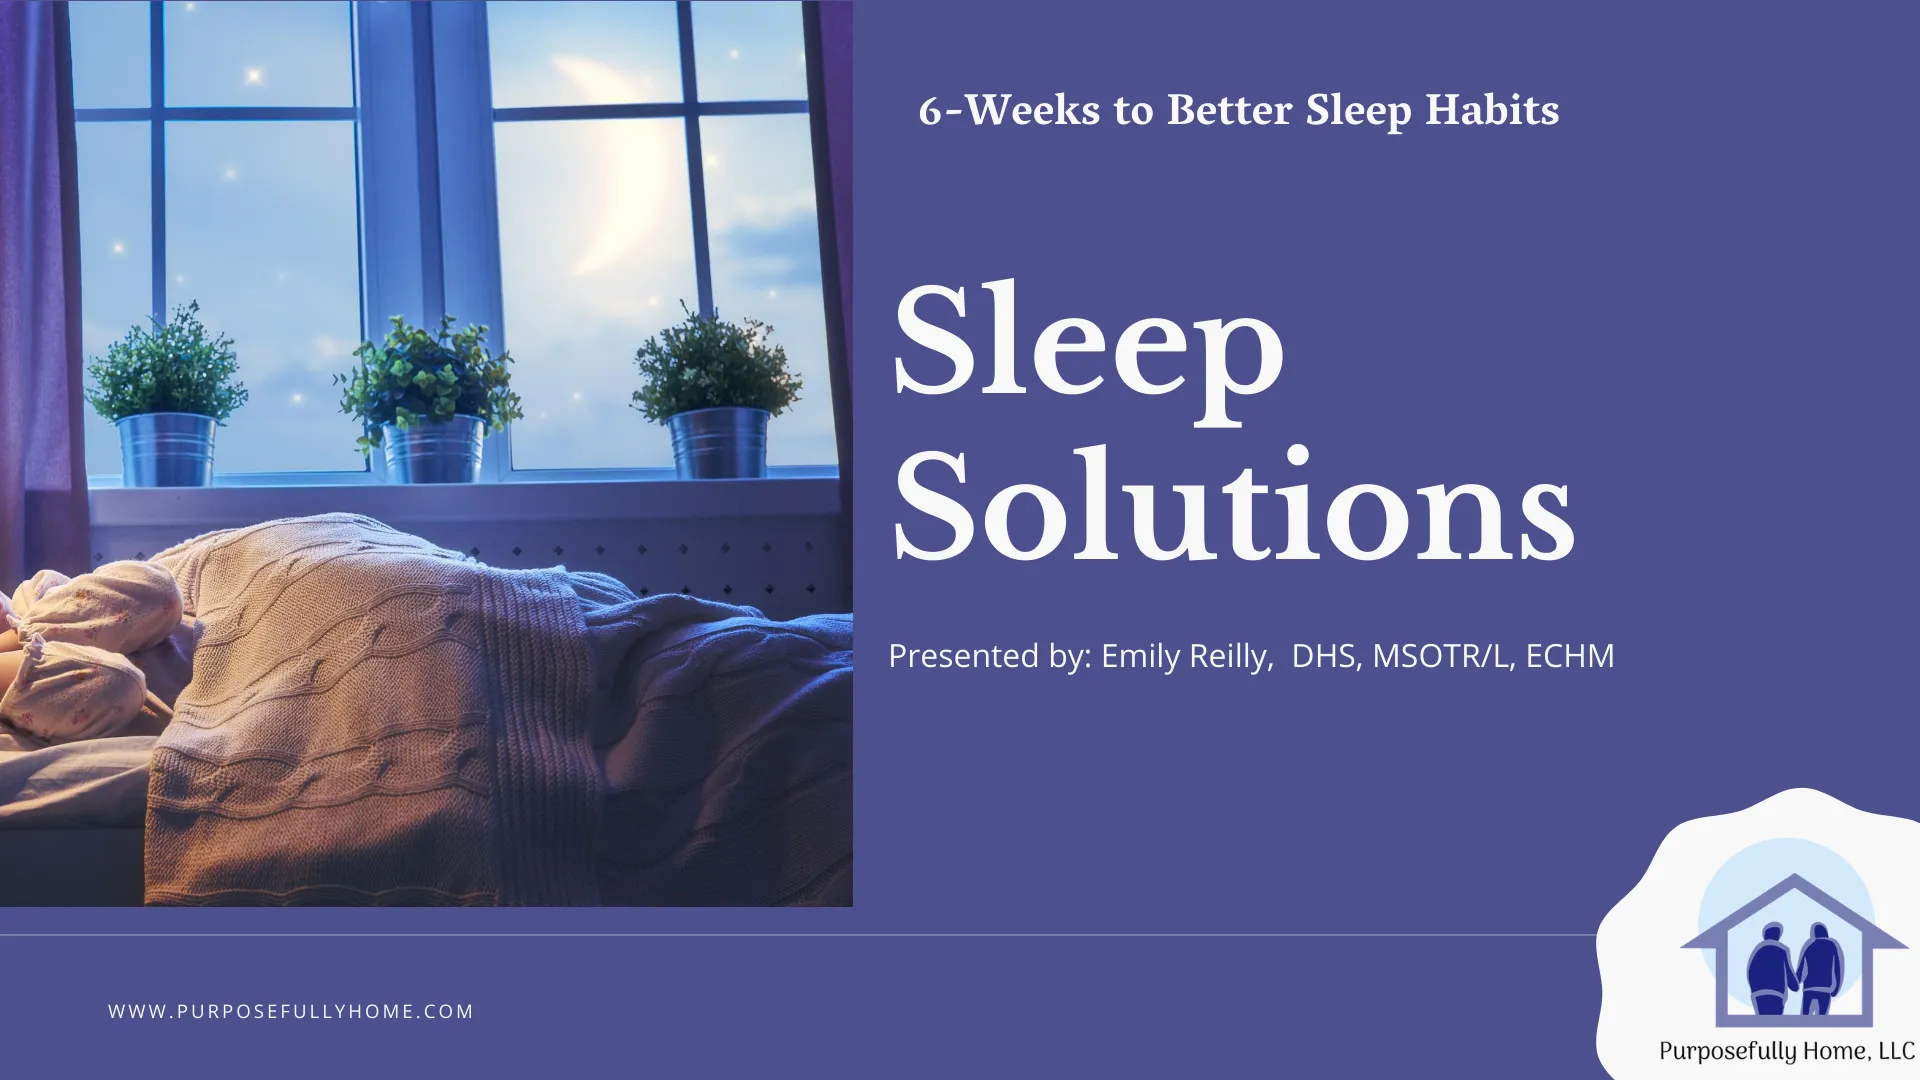 Sleep Solutions Slumber Party VIP